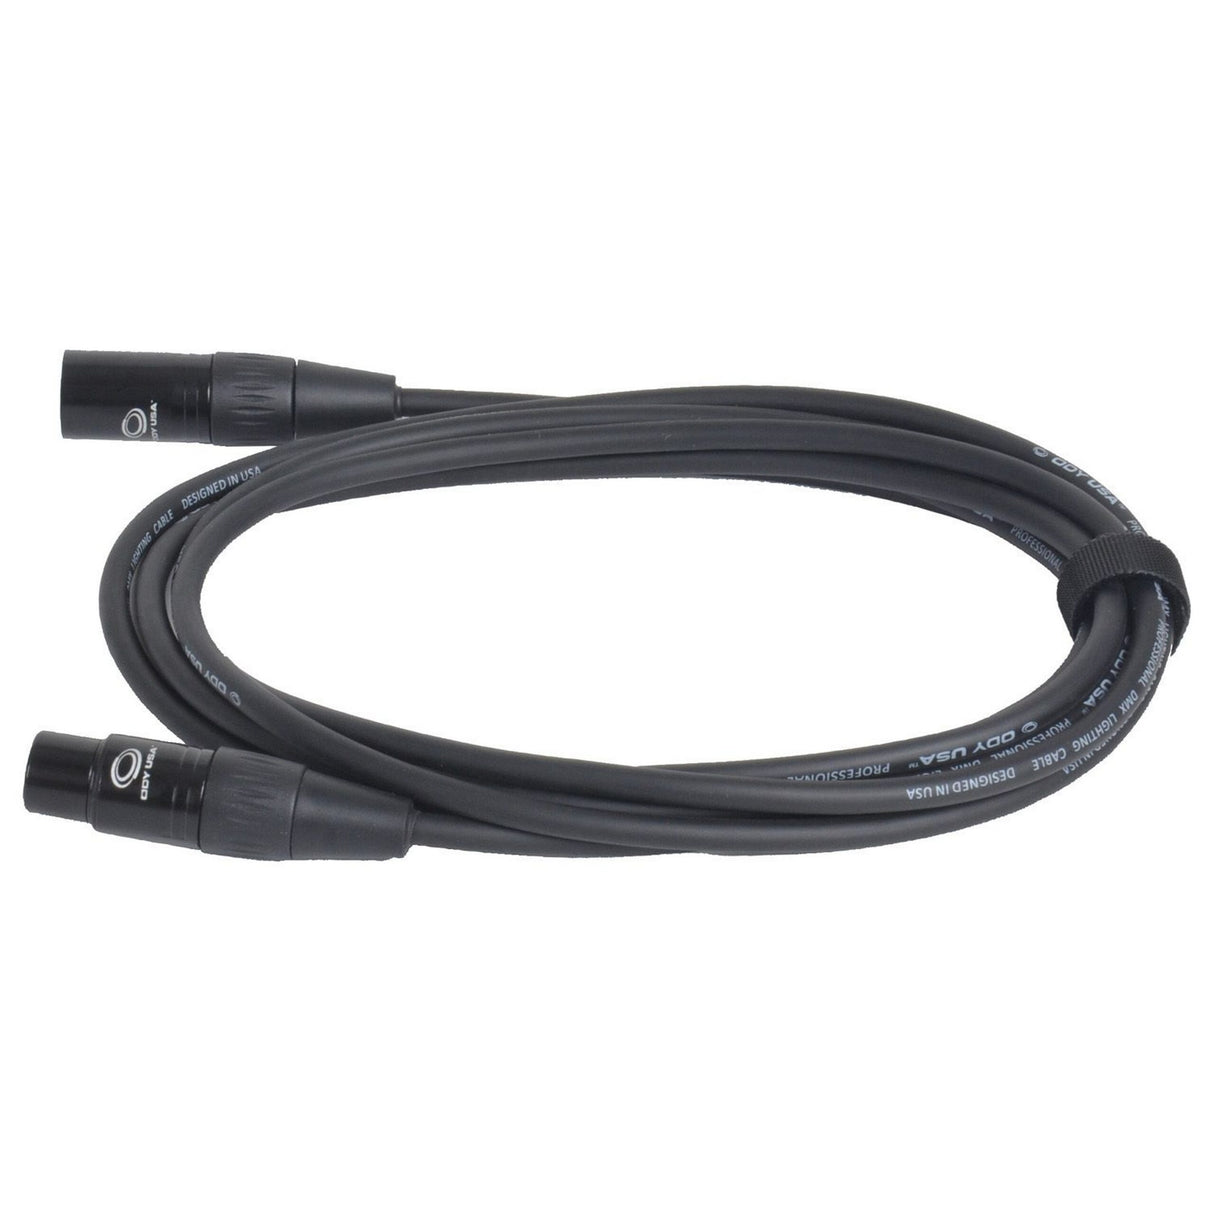 Odyssey OSP110DMX3 DMX XLR Male to XLR Female Cable, 3P Pro, 10-Feet